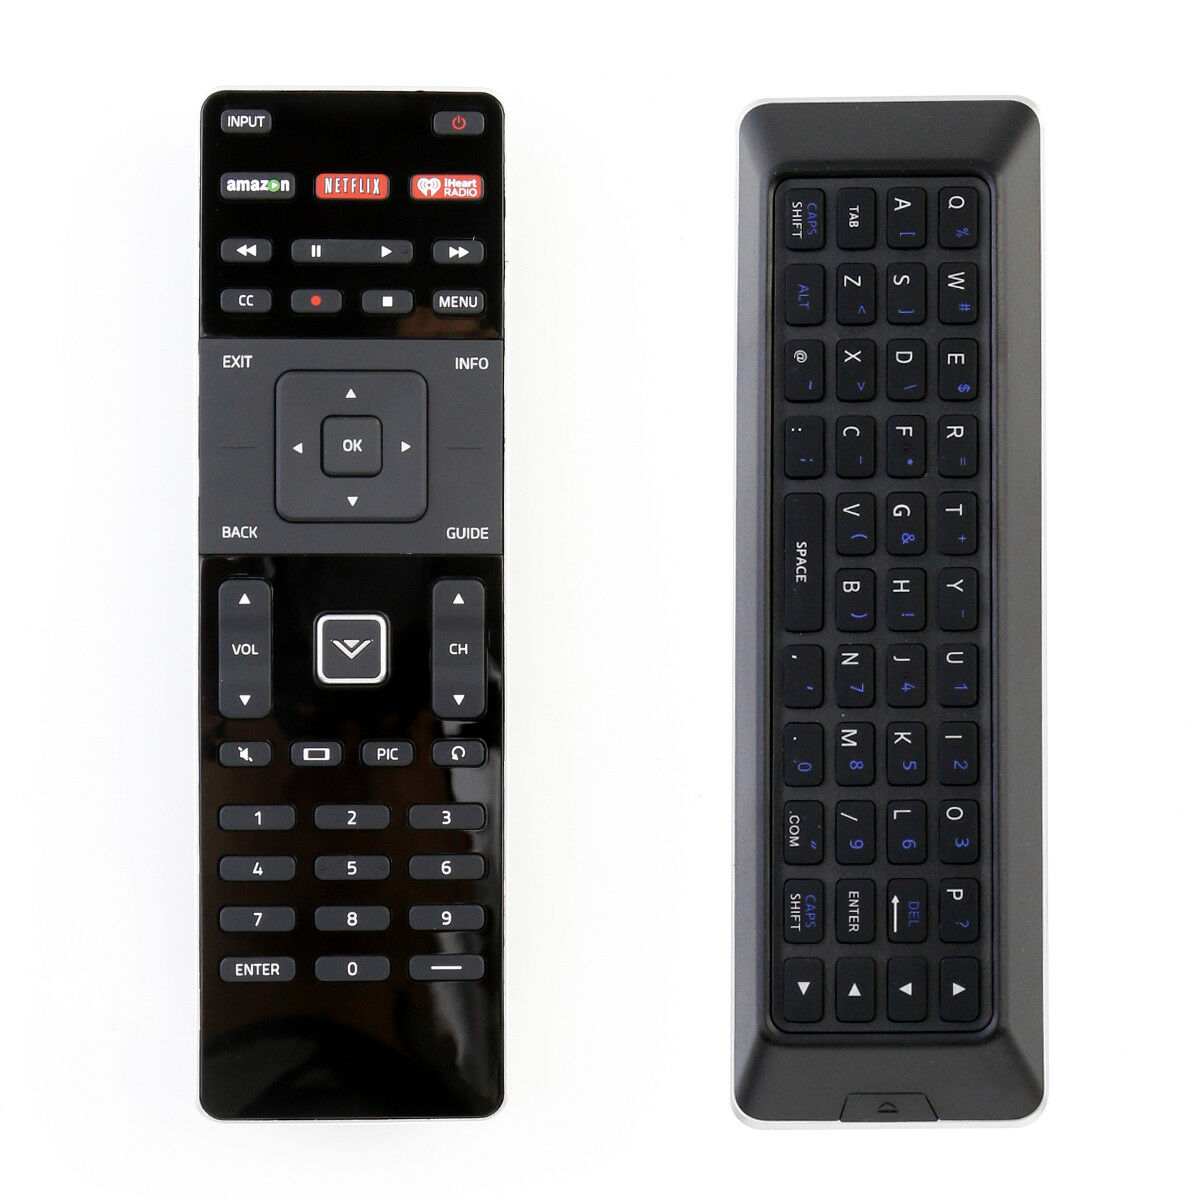 Xrt500 Replacement Remote Contrfol for Vizio Smart Led Tv Qwerty Keyboard Amazon Netflix